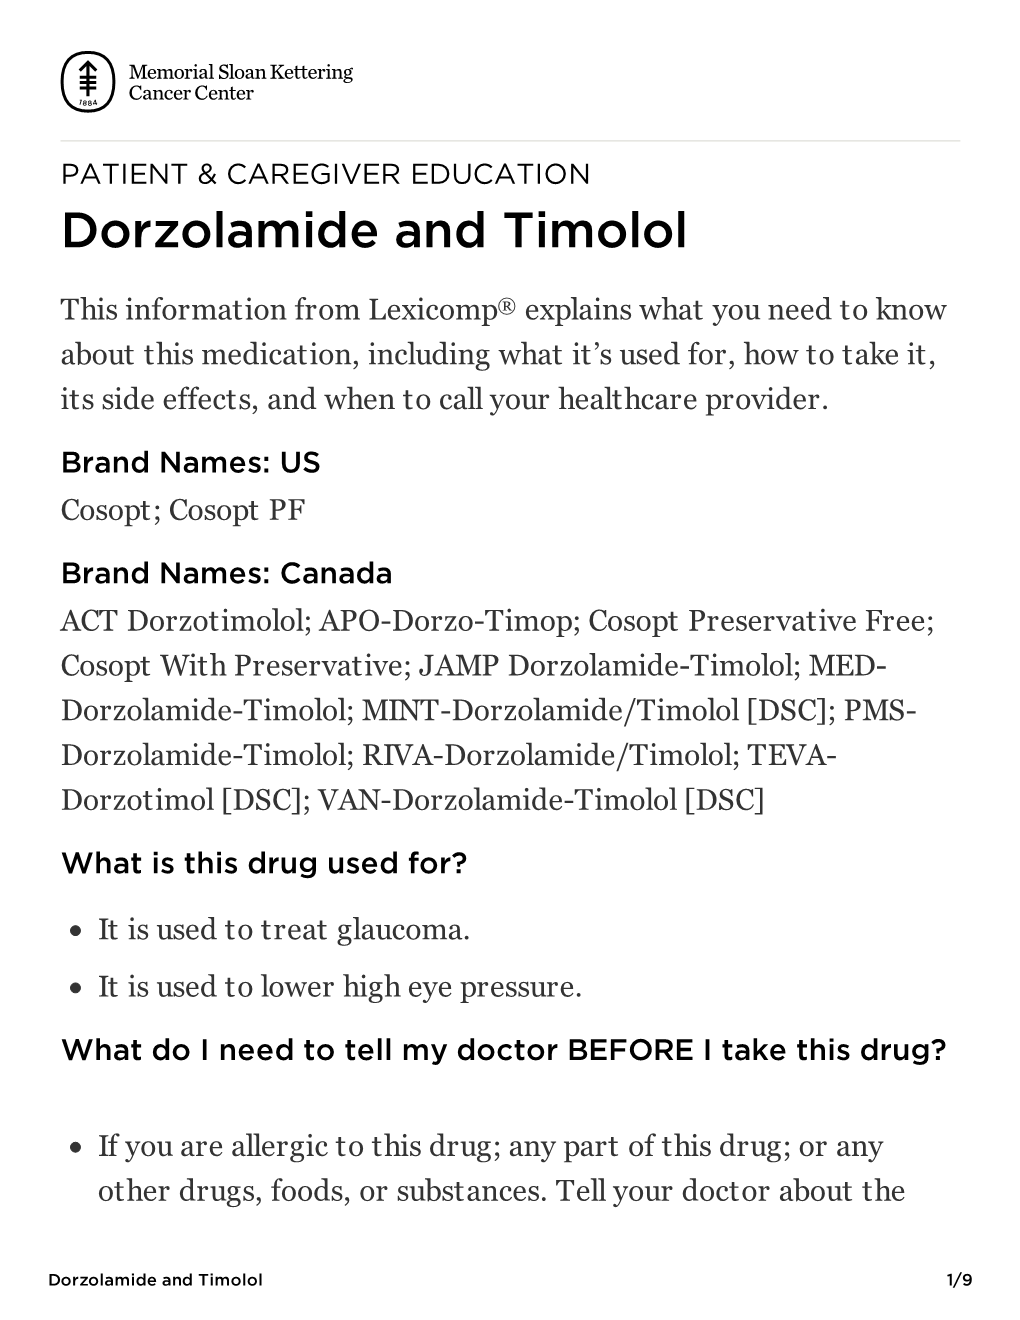 Dorzolamide and Timolol | Memorial Sloan Kettering Cancer Center